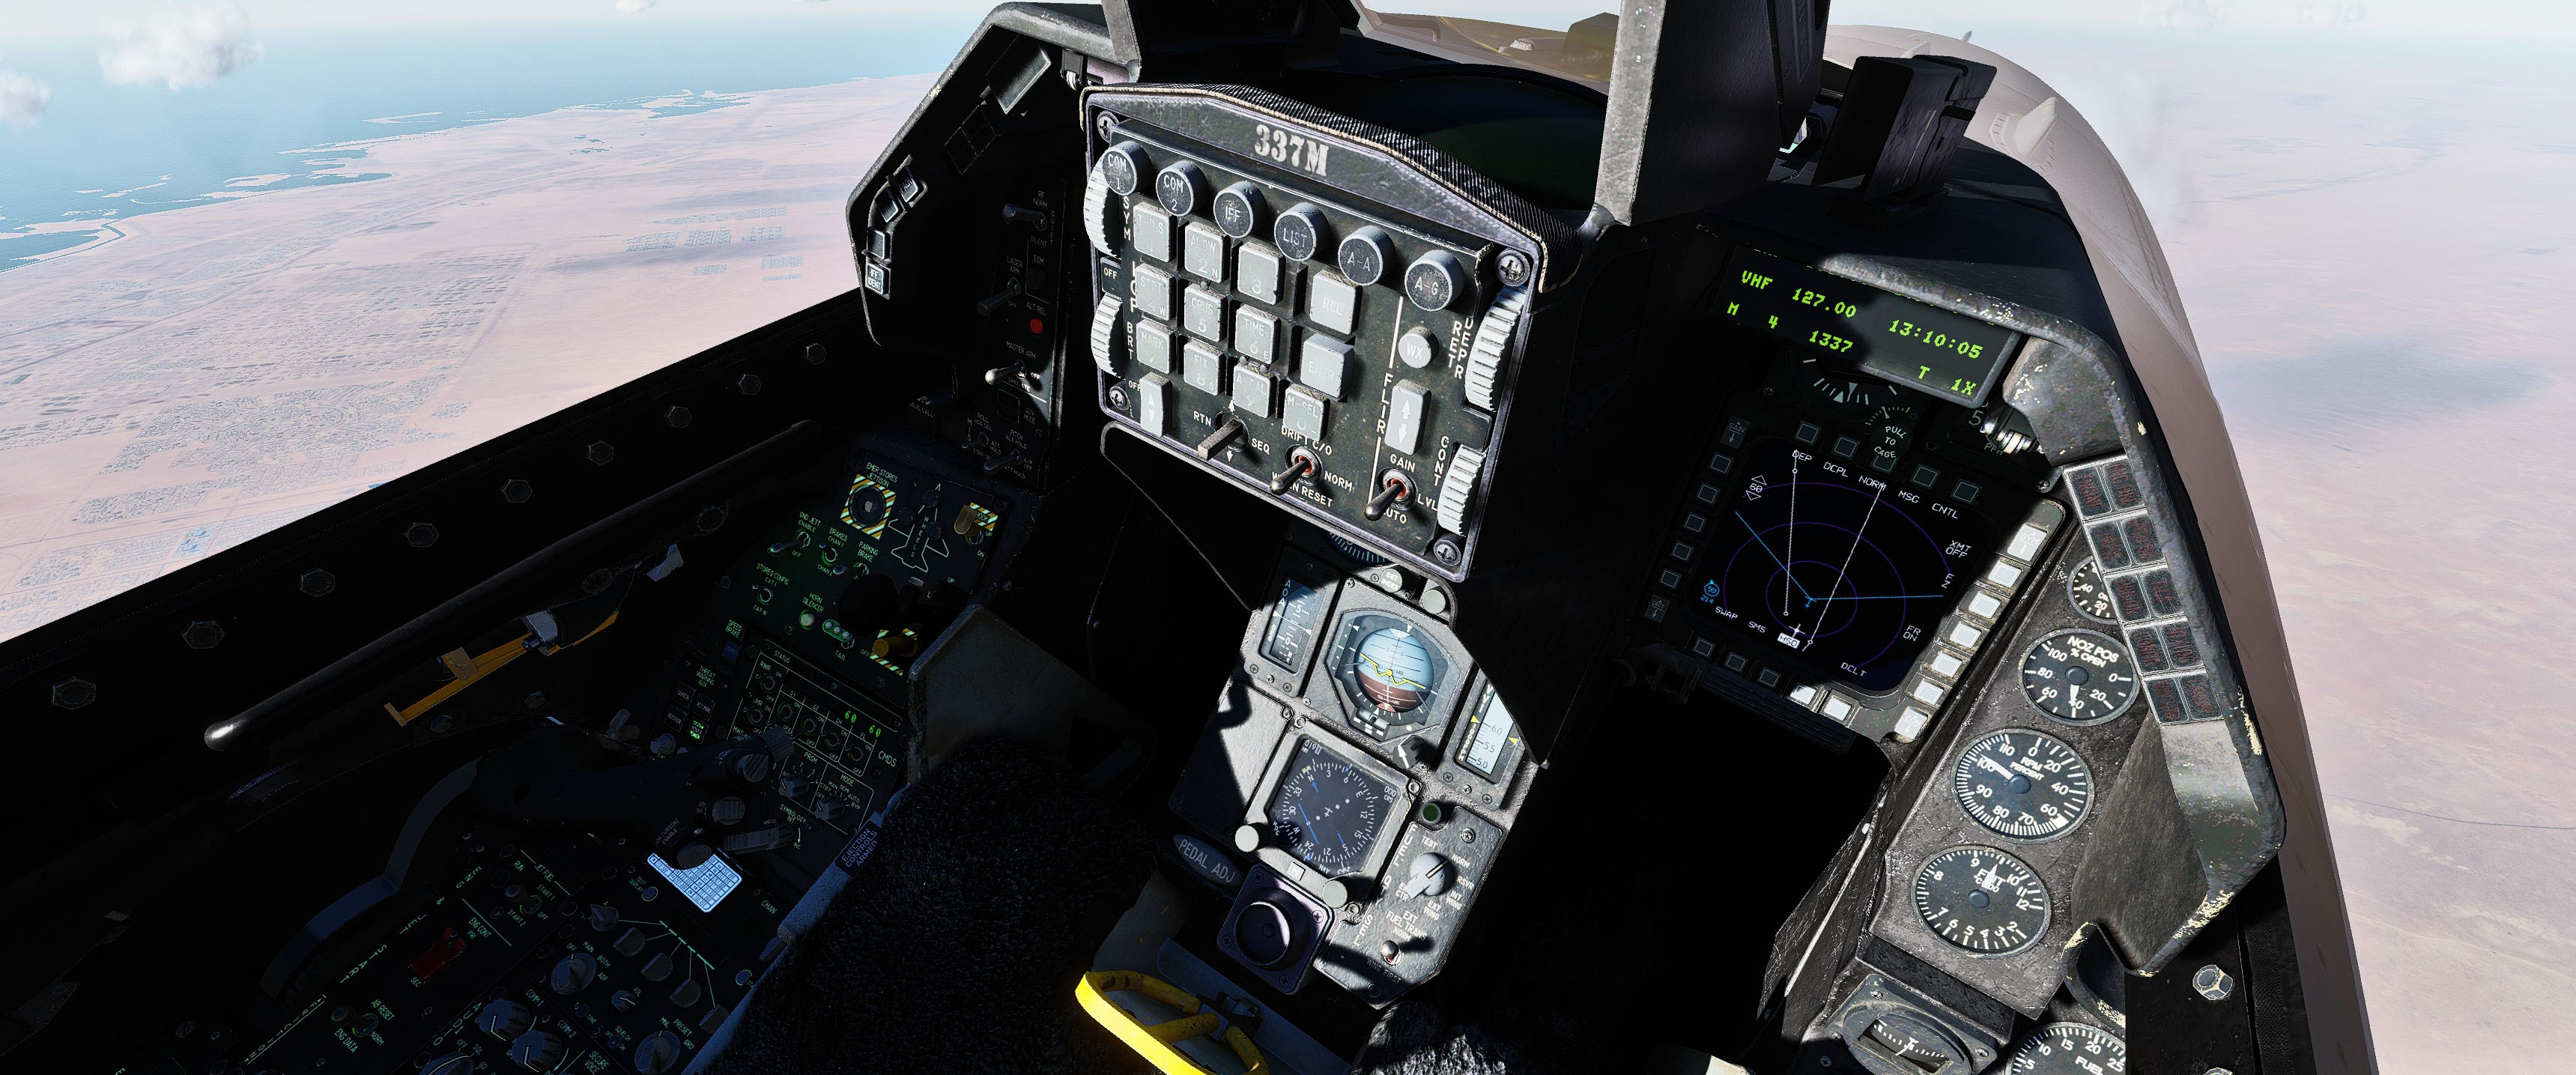 Dark Viper Cockpit Mod HAF 337 sqn V2